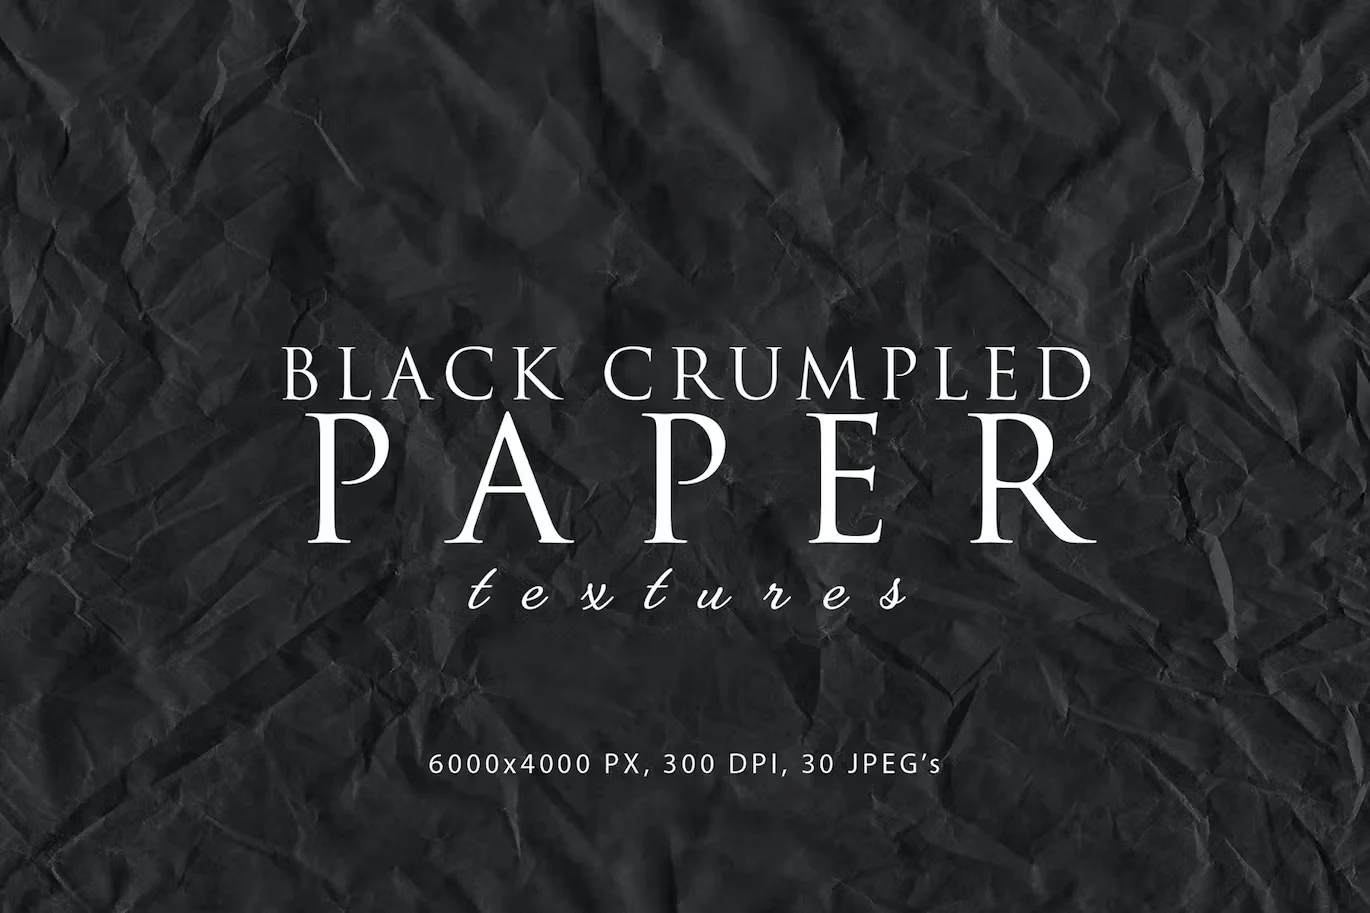 Black Crumpled Paper Textures